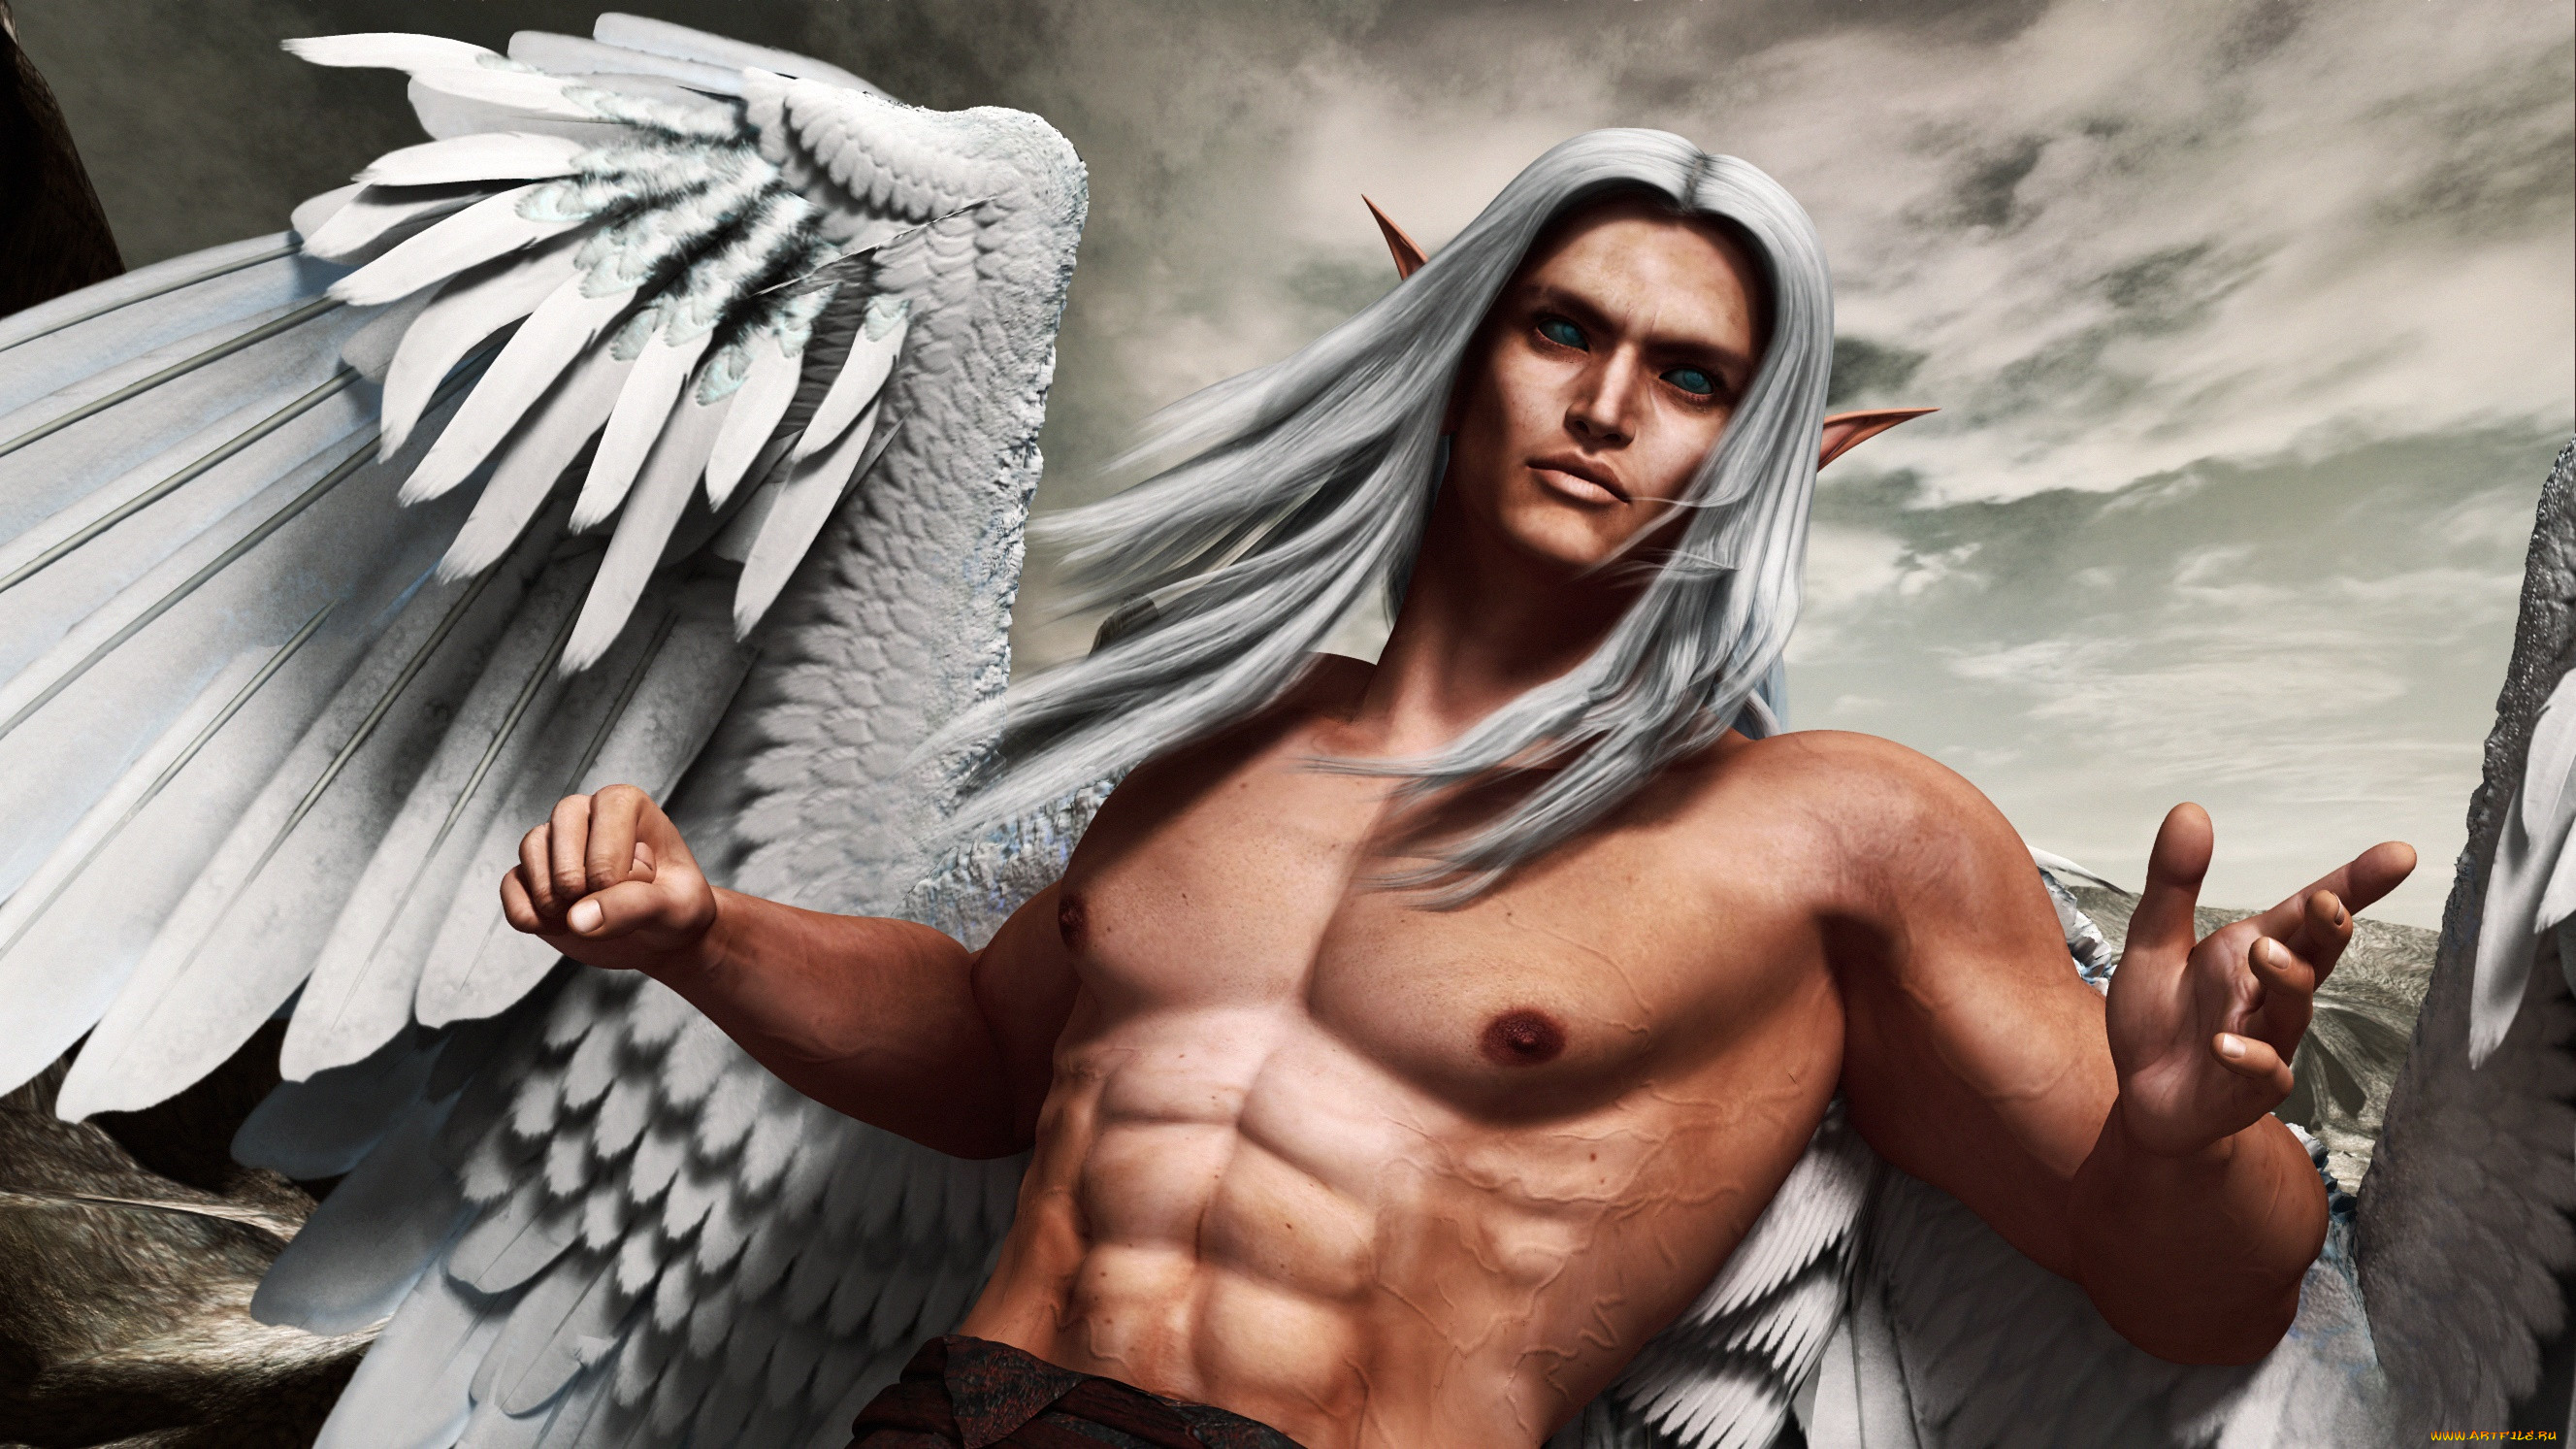 Angels men s. Ангел мужчина. Мужчина с крыльями. Красивый ангел парень. Парень с крыльями.